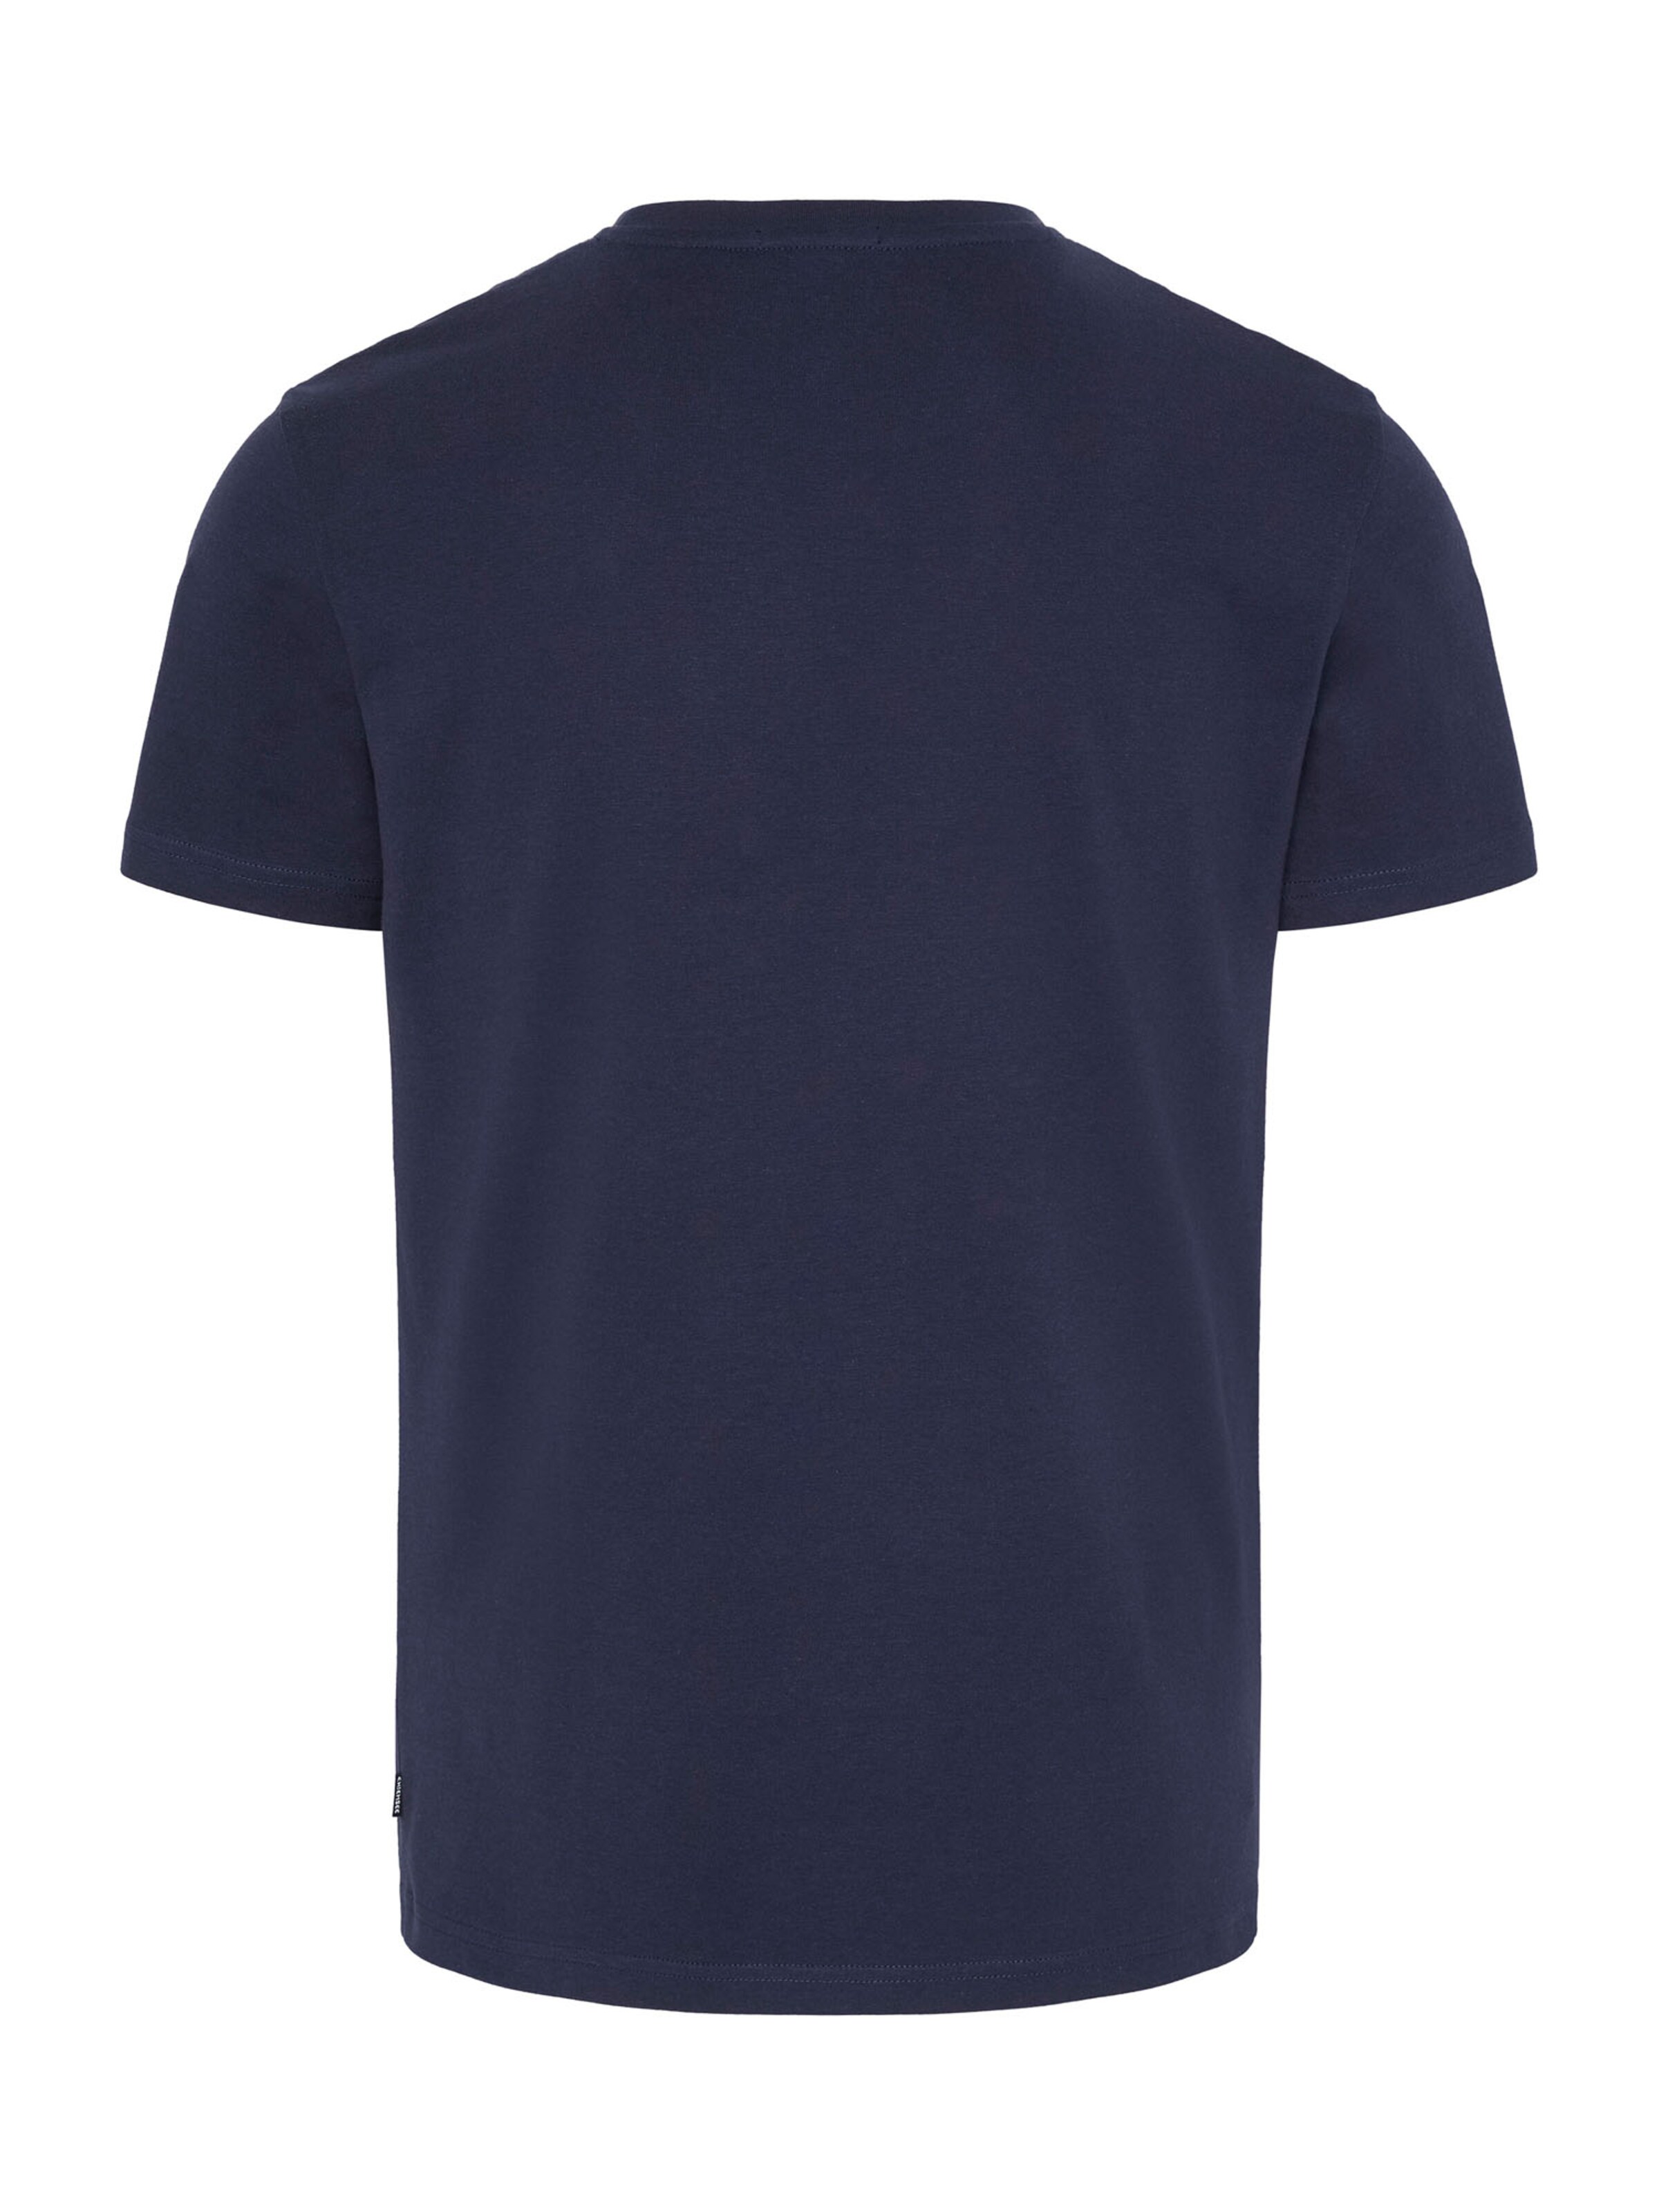 Männer Shirts CHIEMSEE T-Shirt in Blau, Navy, Hellblau - IN07825